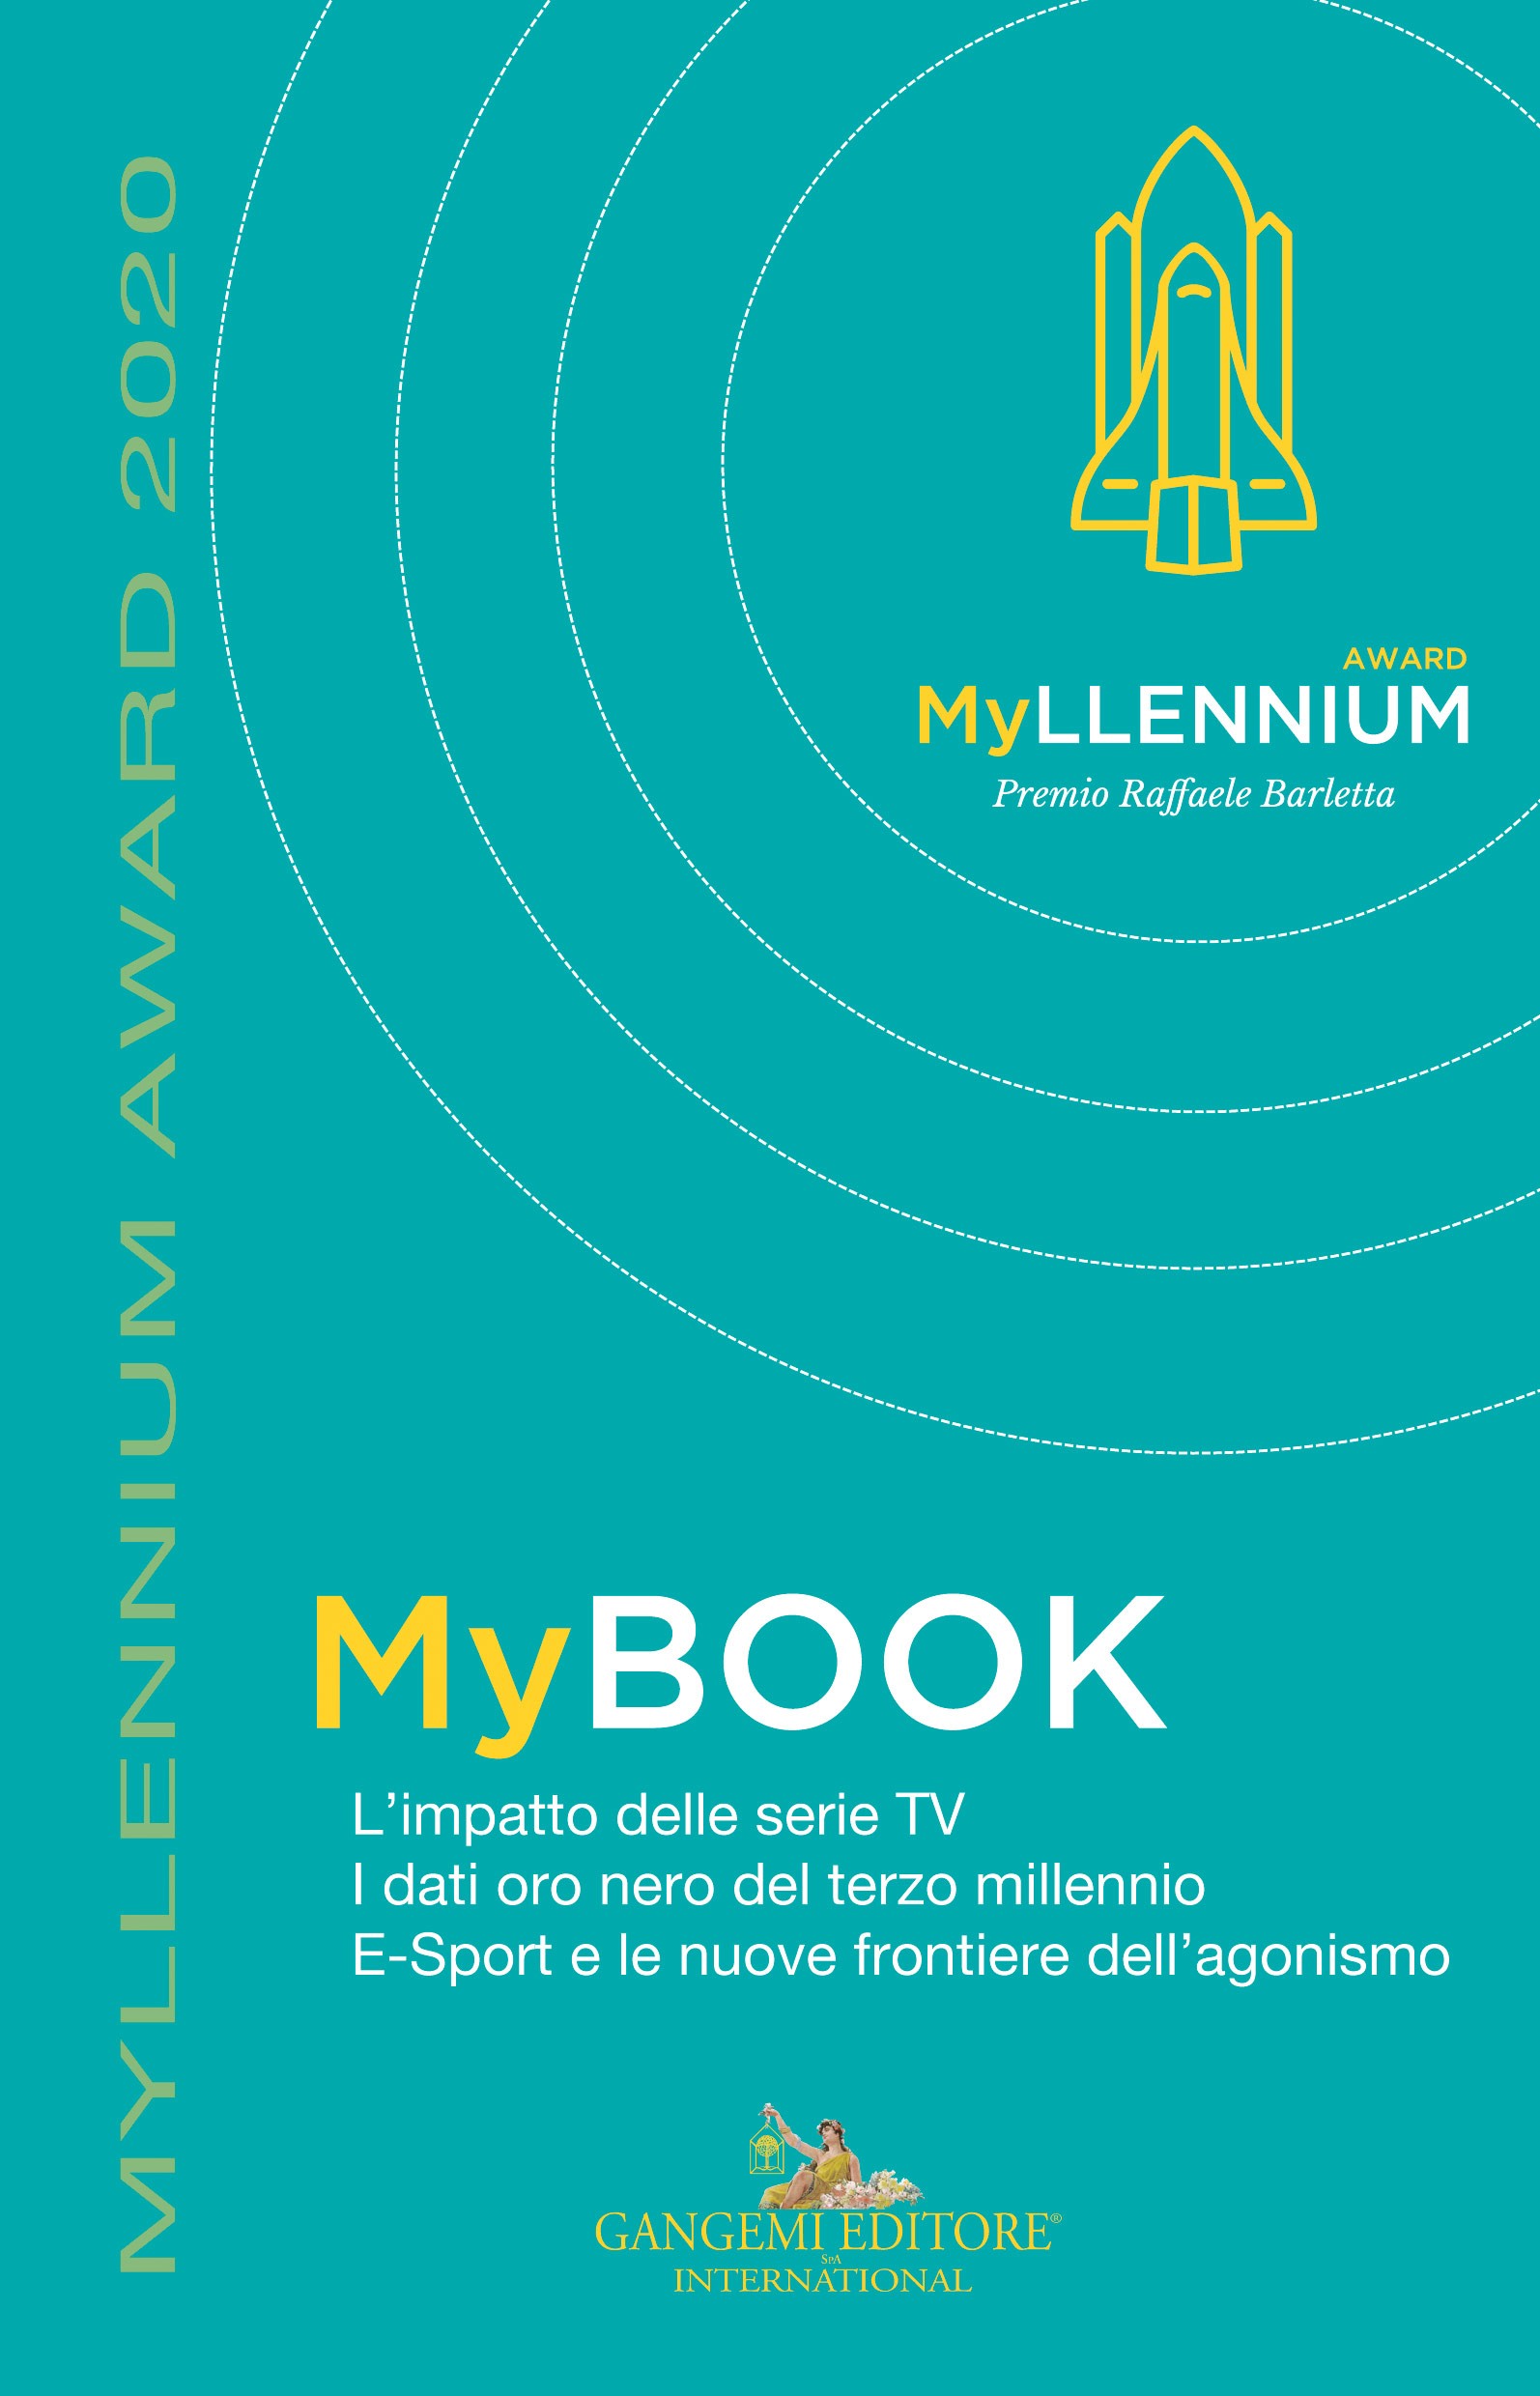 myllennium award 2020 book gangemi editore